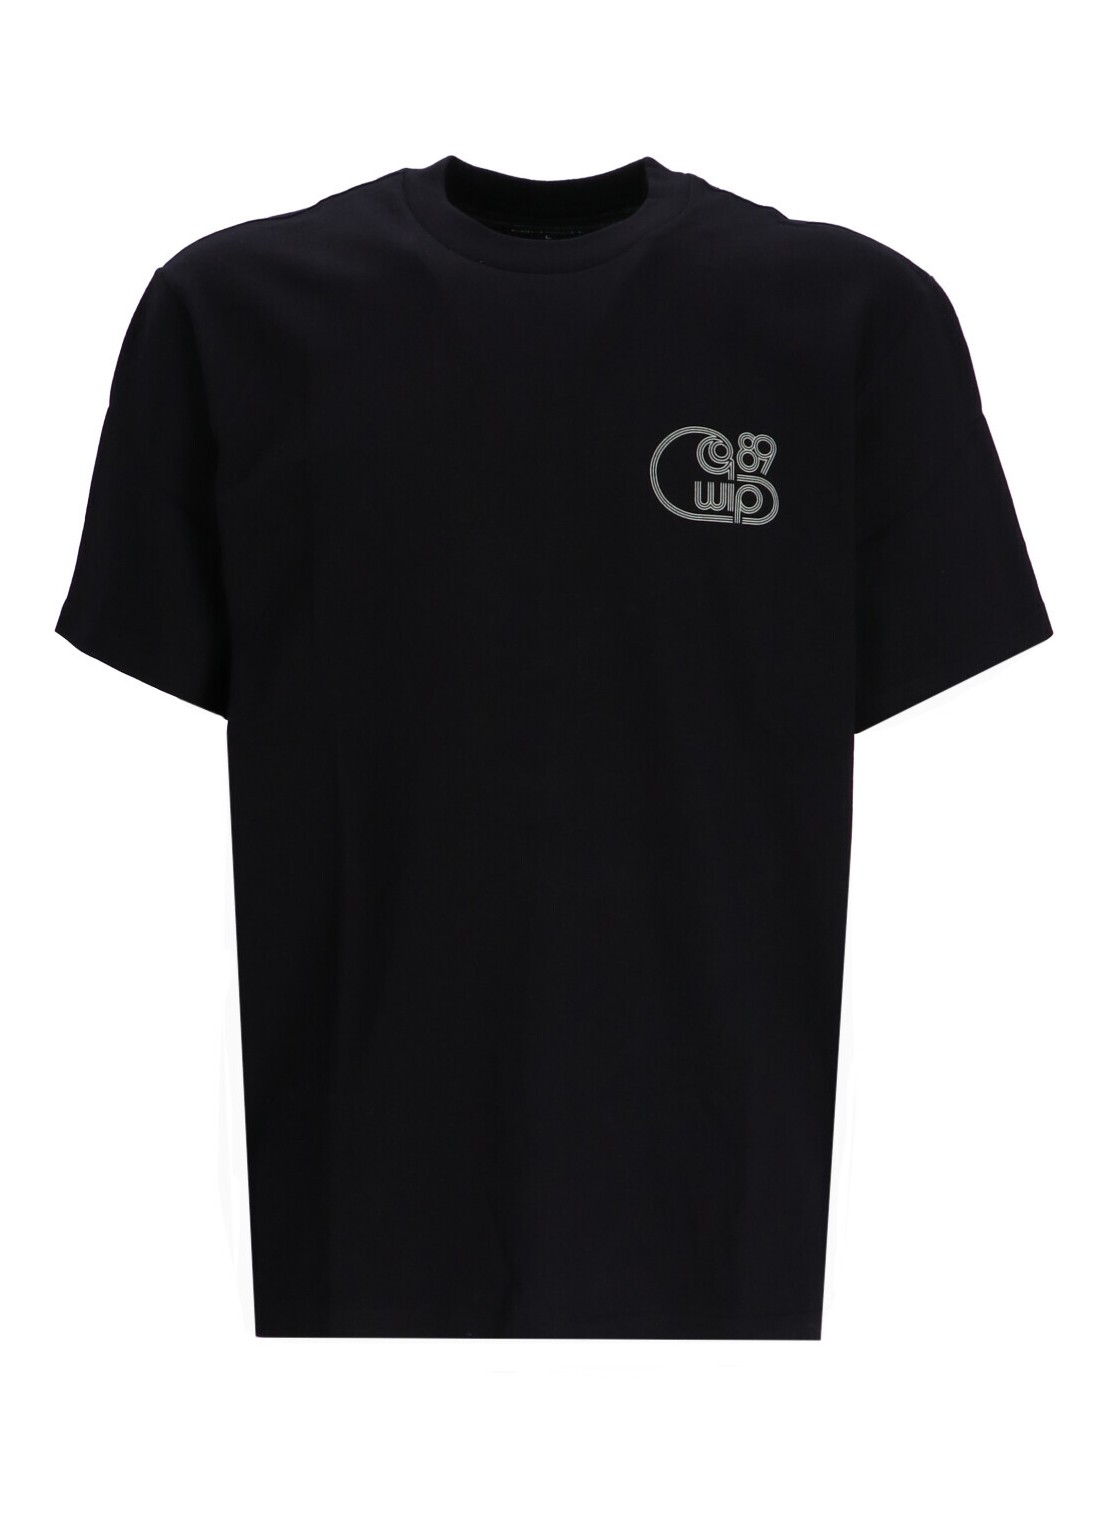 Camiseta carhartt t-shirt man s/s night night t-shirt i033172 1xdxx talla L
 